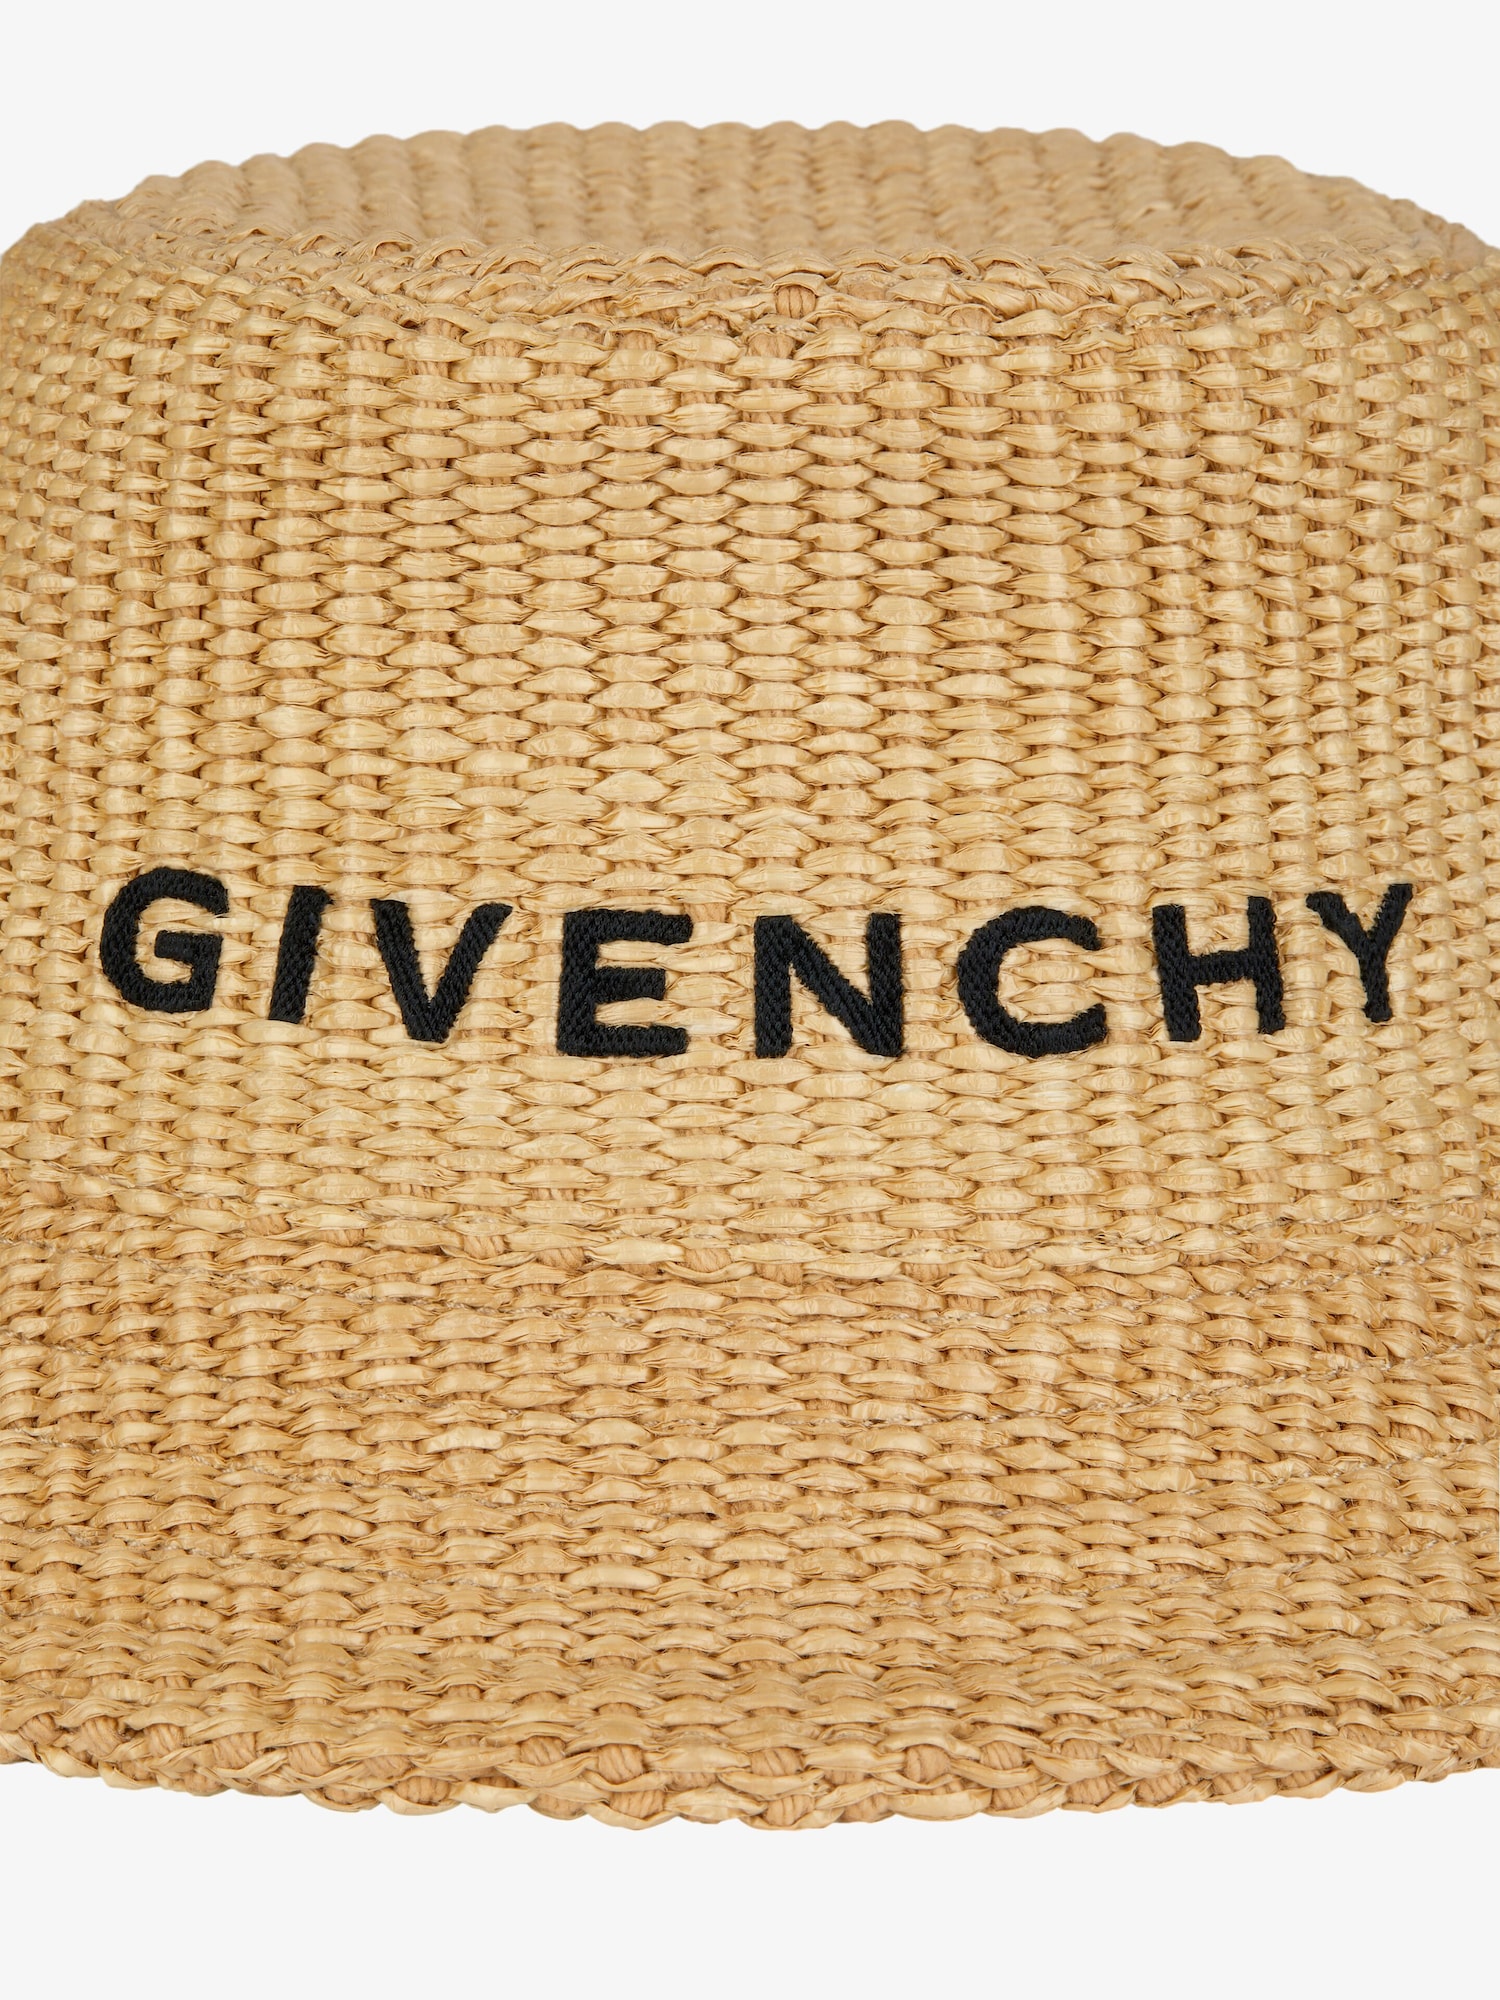 GIVENCHY bucket hat in raffia | Givenchy ASI | Givenchy